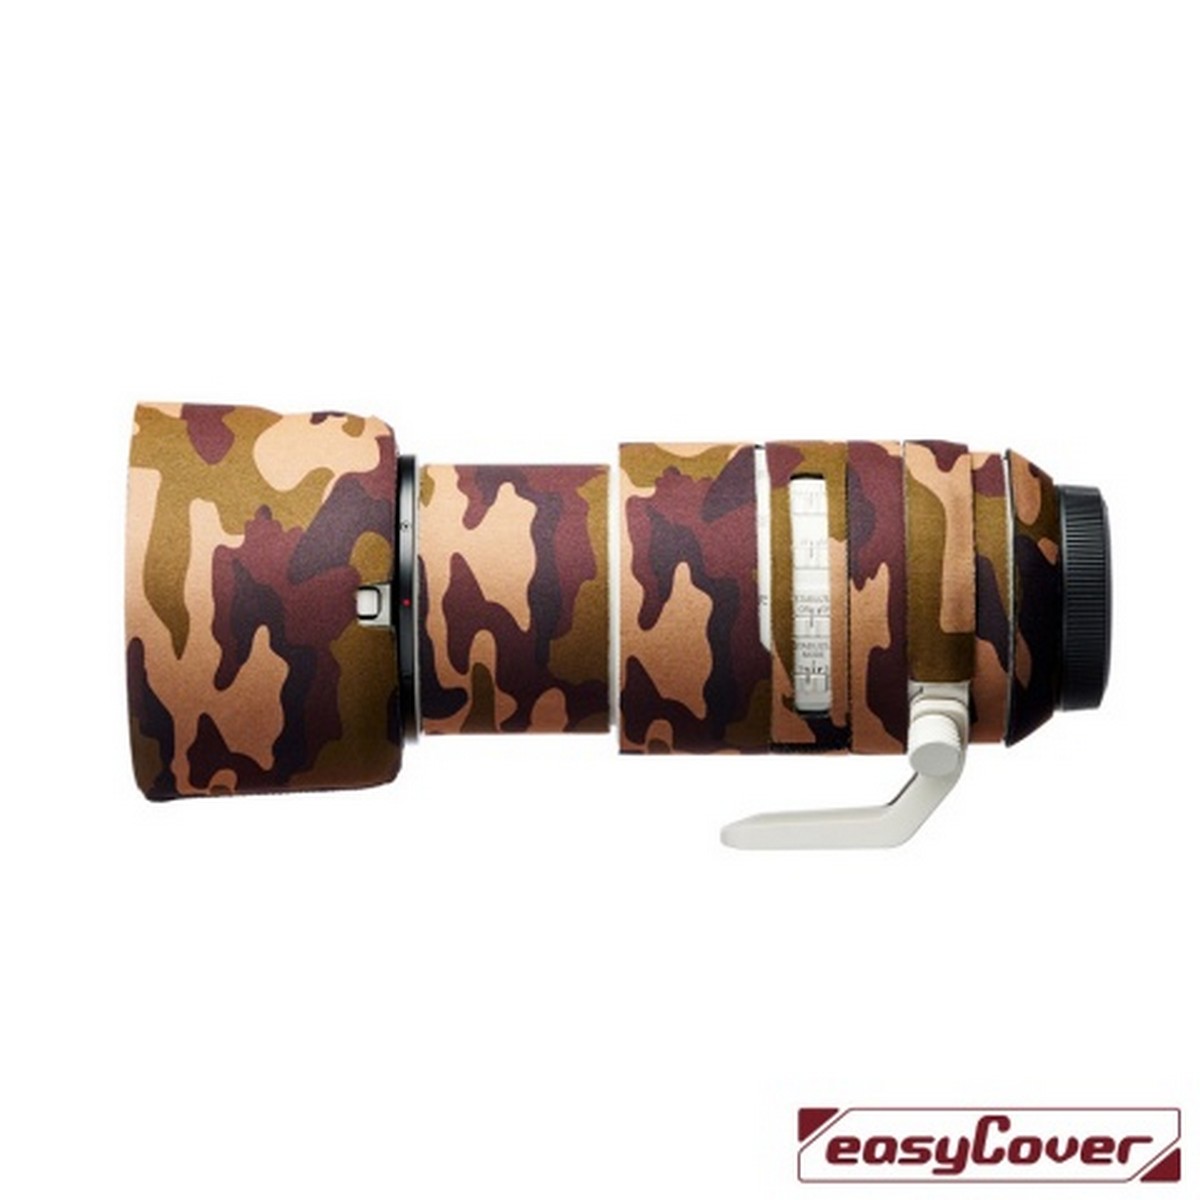 Easycover Lens Oak Objektivschutz für Canon RF 70-200 mm 1:2.8L IS USM Brown Camouflage